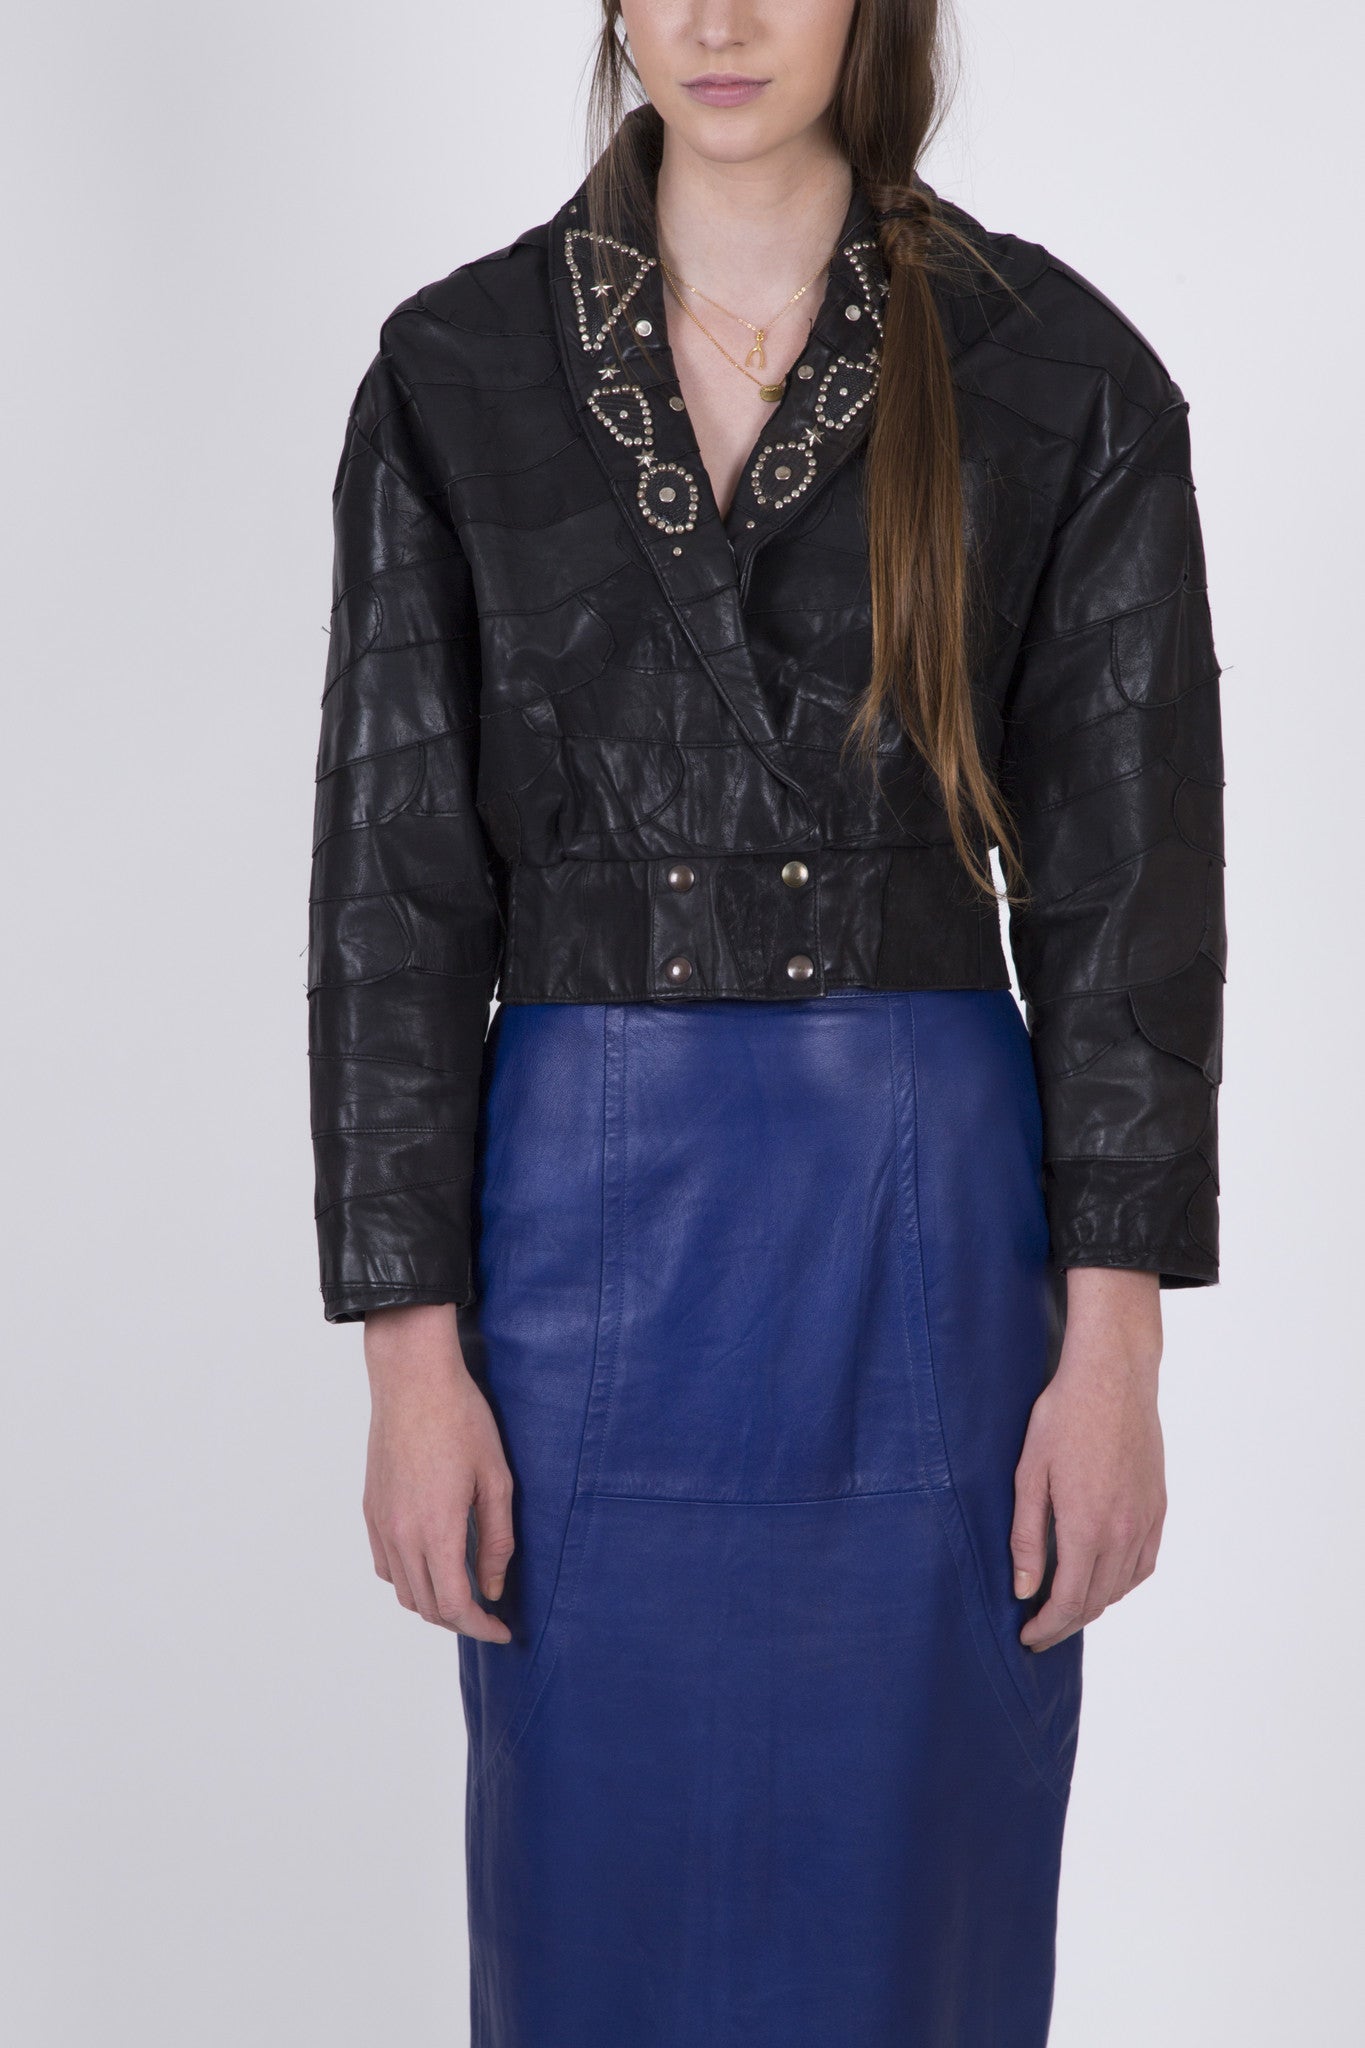 Neo Rock Black Vintage Leather Jacket with Studs: Size Medium